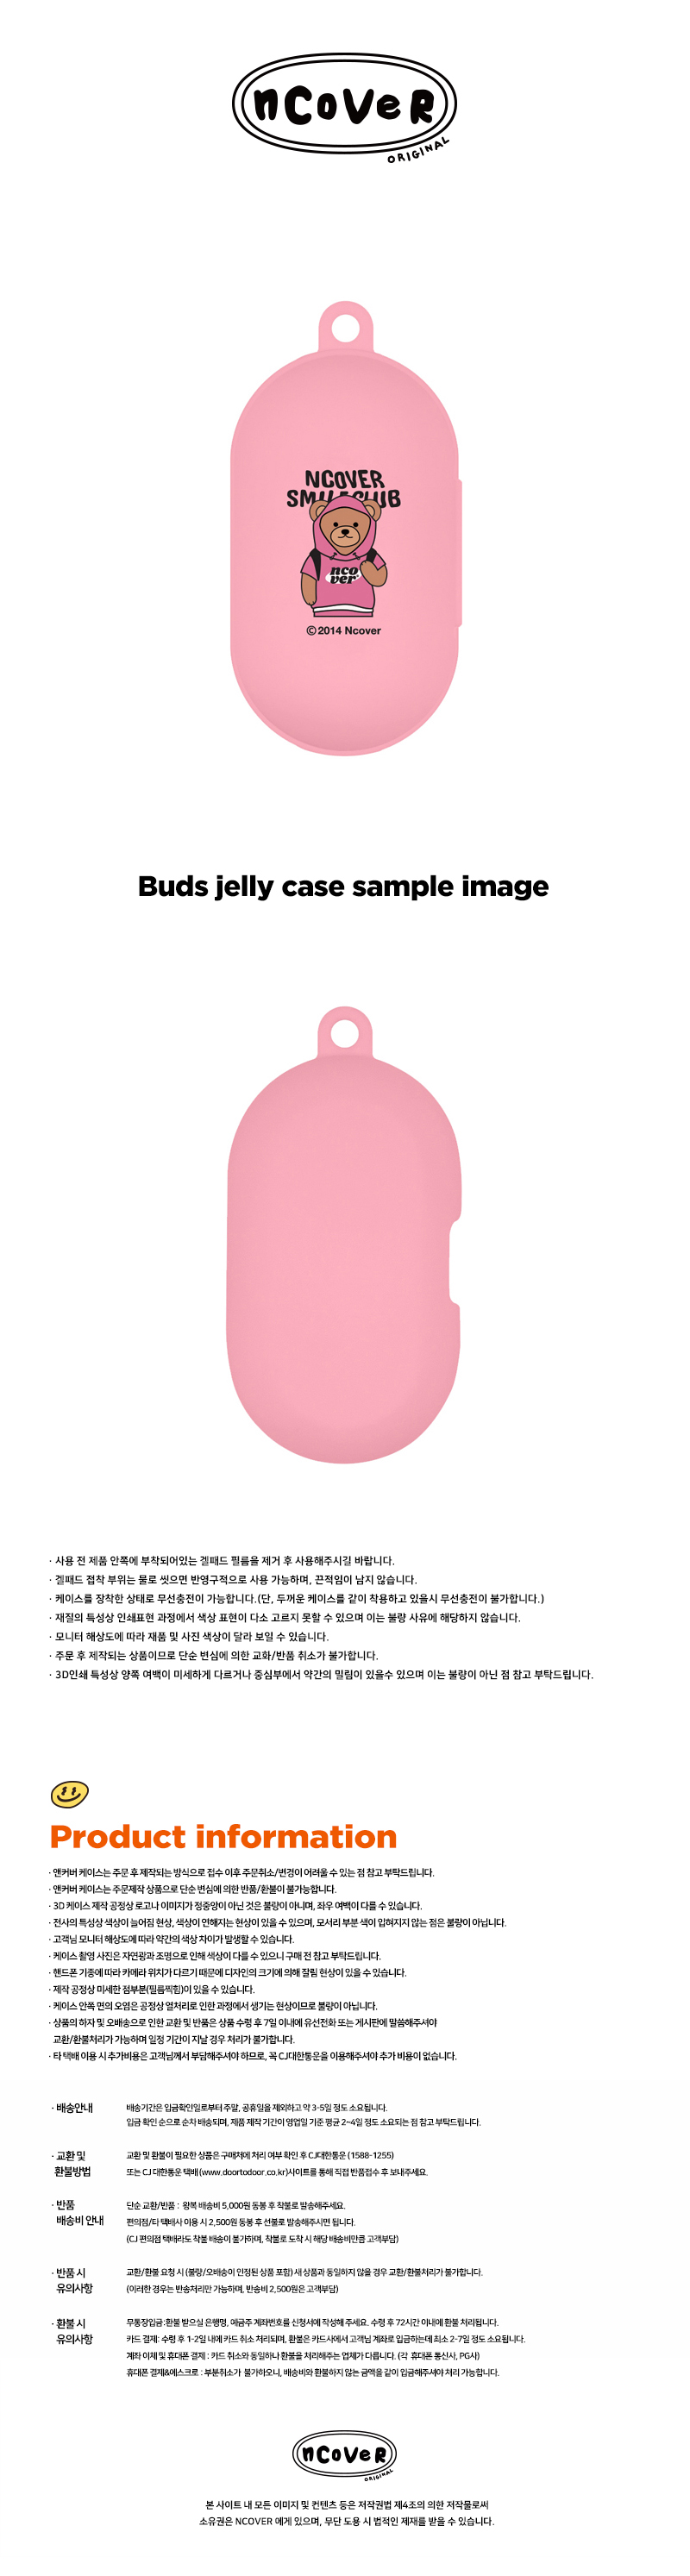  Hoodie bruin-pink(buds jelly)  15,000원 - 바이인터내셔널주식회사 디지털, 이어폰/헤드폰, 이어폰/헤드폰 액세서리, 에어팟/에어팟프로 케이스 바보사랑  Hoodie bruin-pink(buds jelly)  15,000원 - 바이인터내셔널주식회사 디지털, 이어폰/헤드폰, 이어폰/헤드폰 액세서리, 에어팟/에어팟프로 케이스 바보사랑